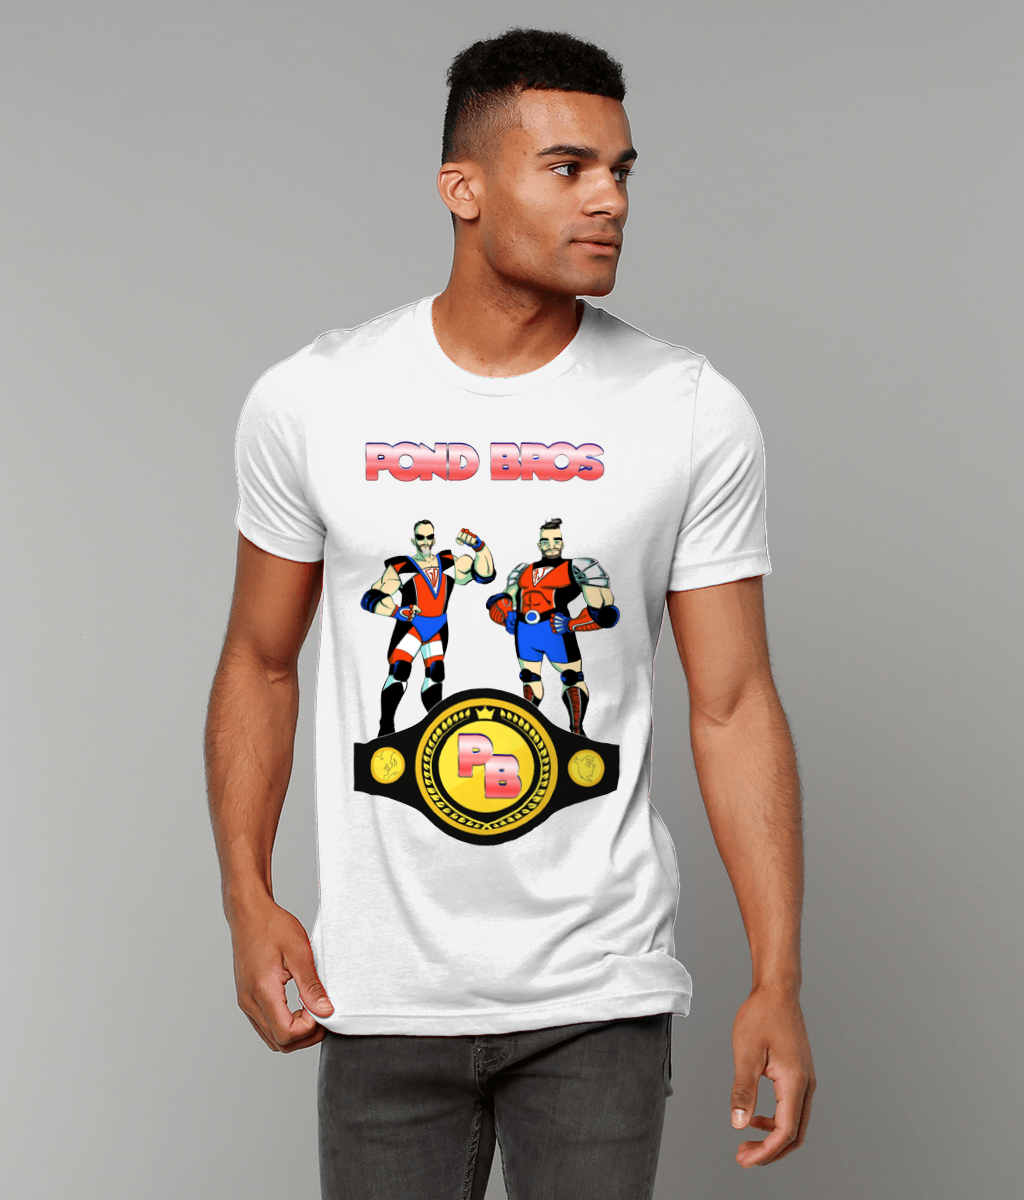 Pond Bros Promo T-shirt (with belt)